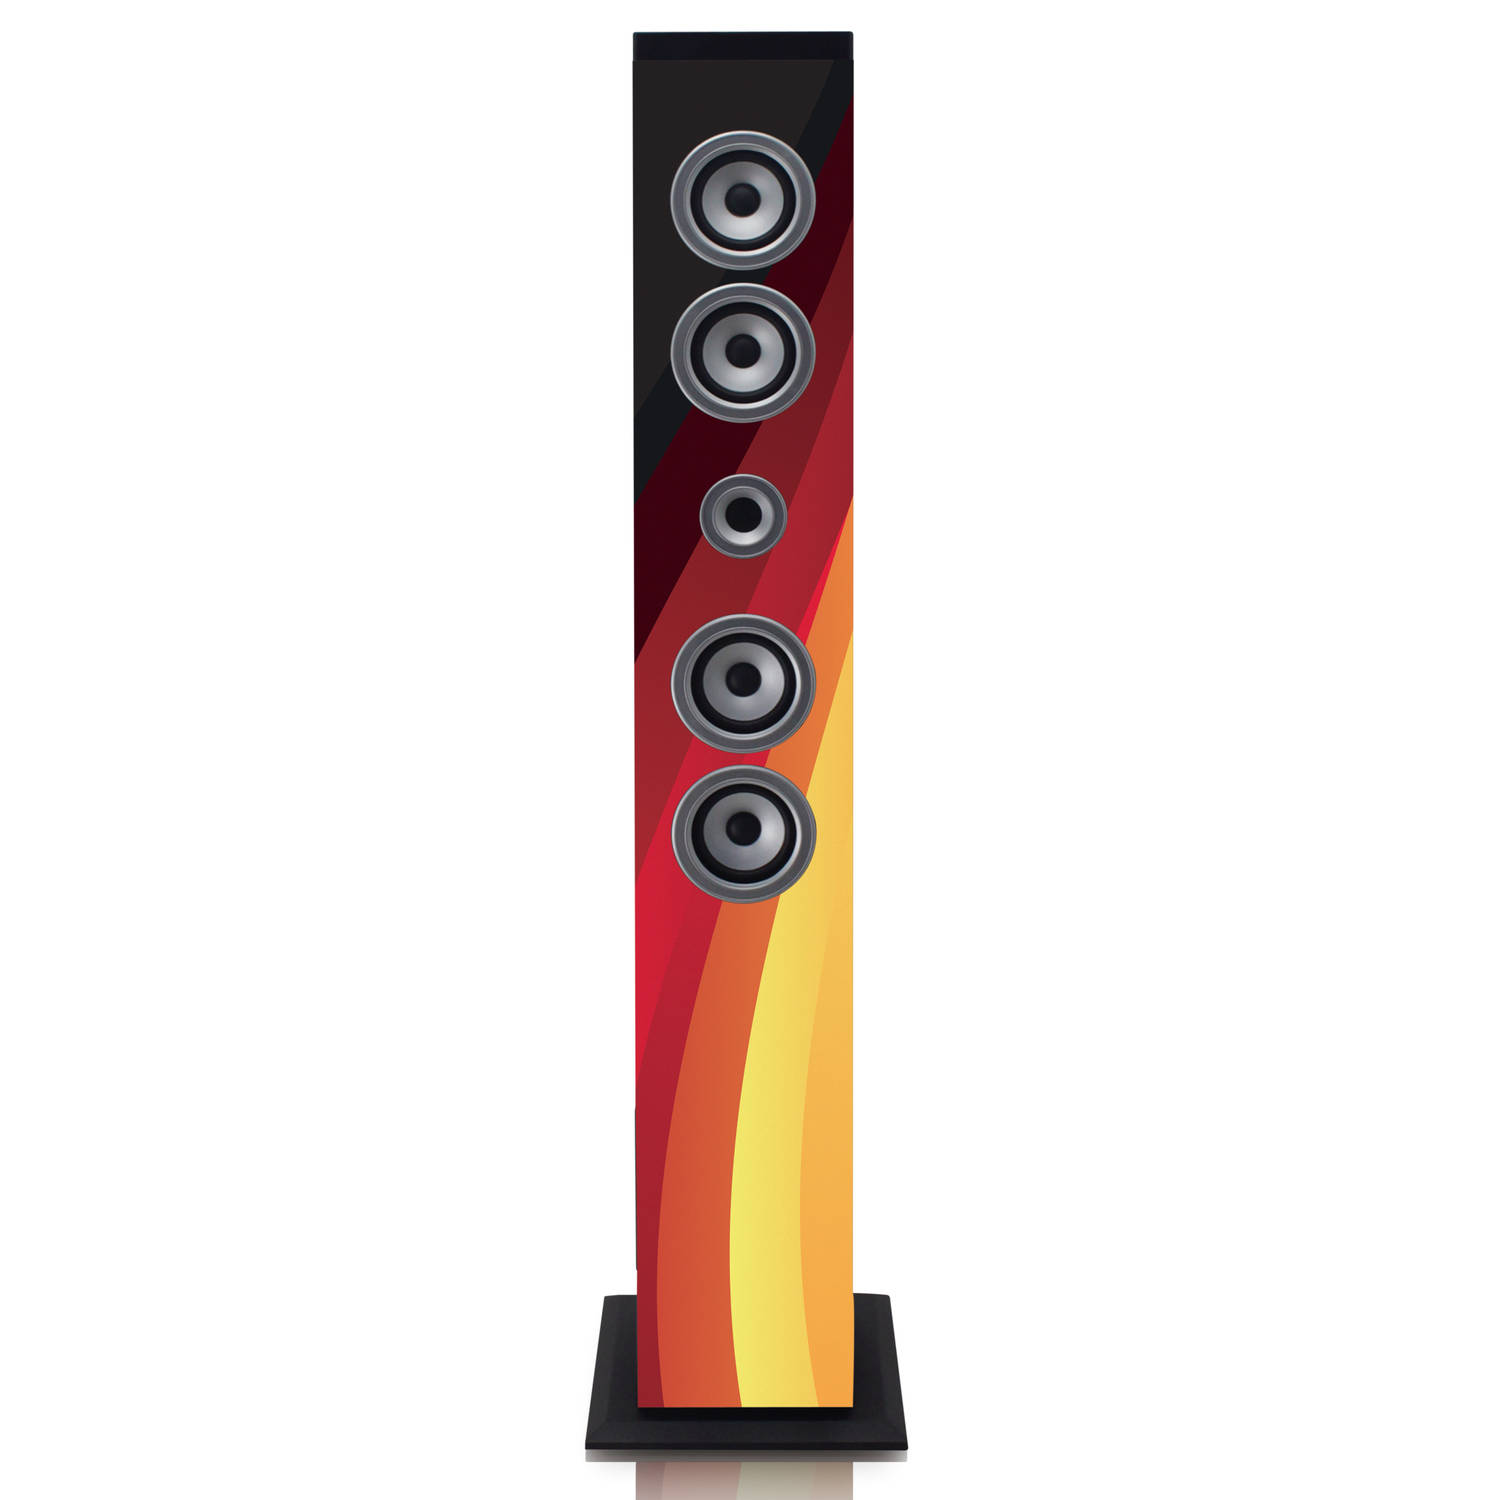 Ices IBT-6 Speaker toren met Bluetooth,FM Radio,USB- en SD speler - Duitse vlag Zwart-Rood-Goud